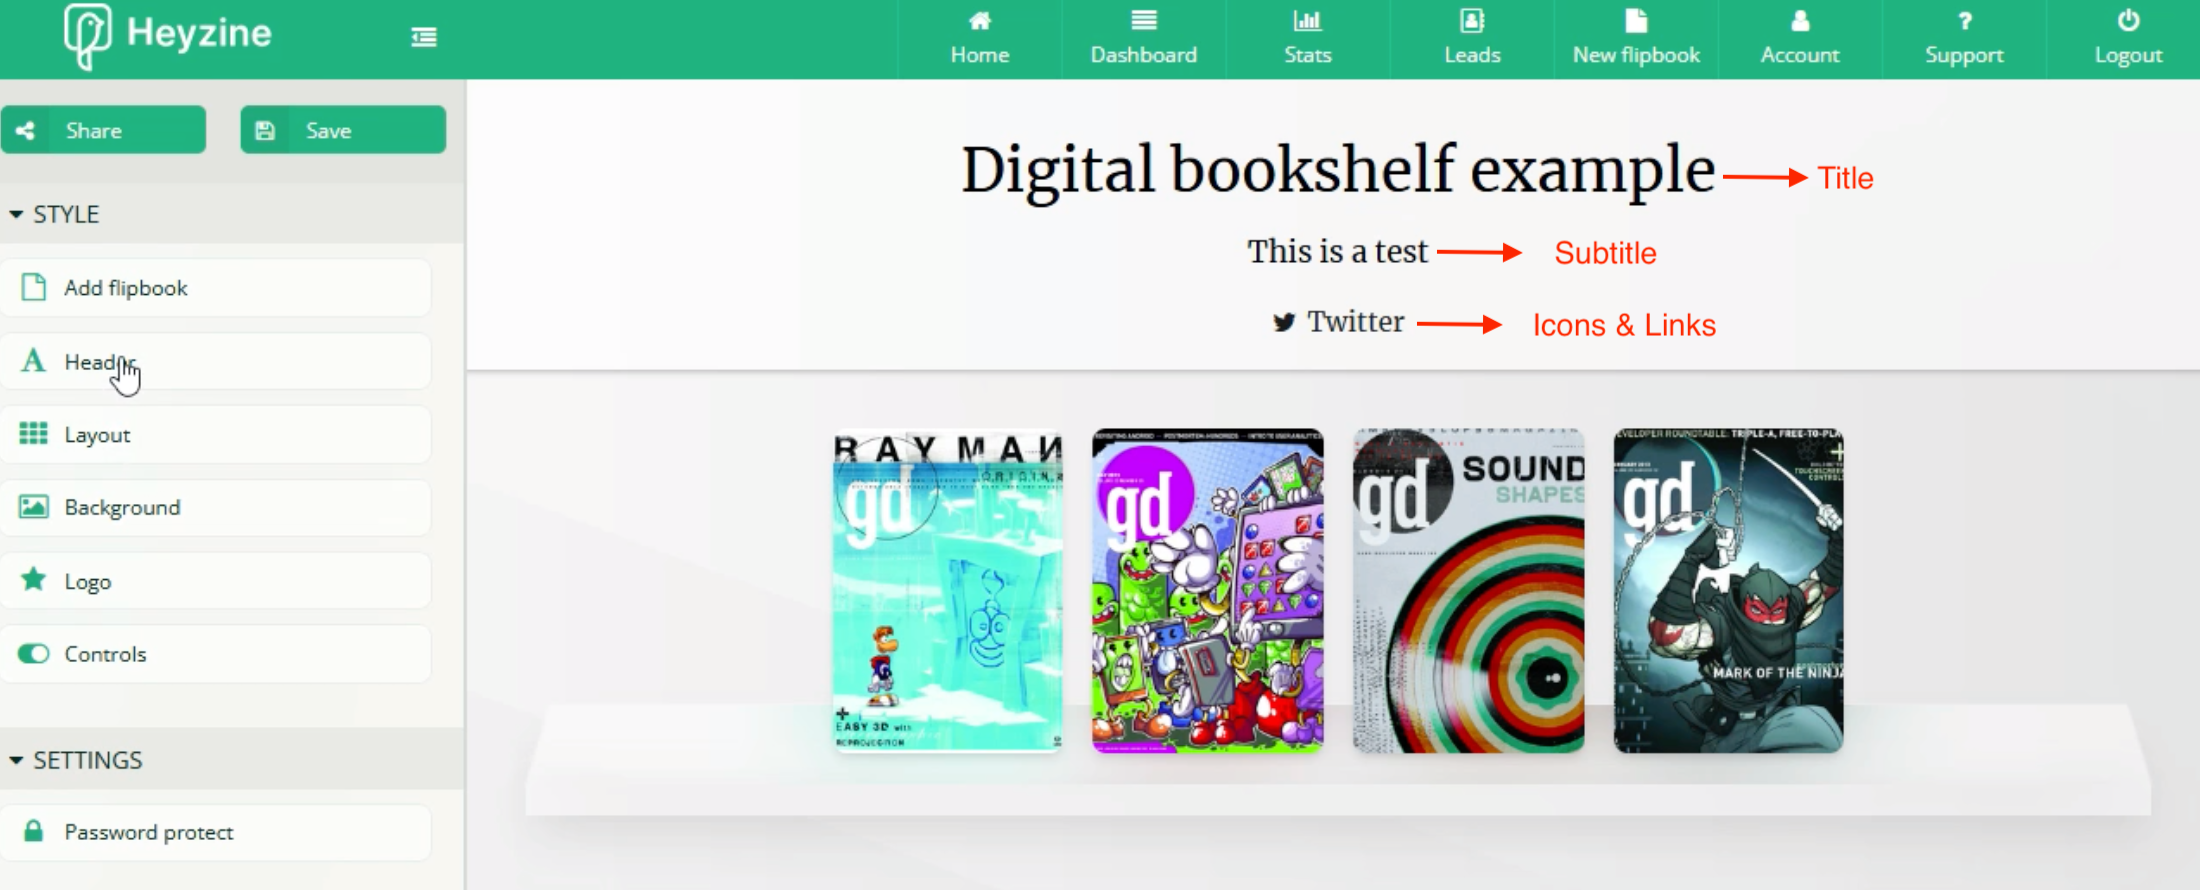 digital bookshelf with header